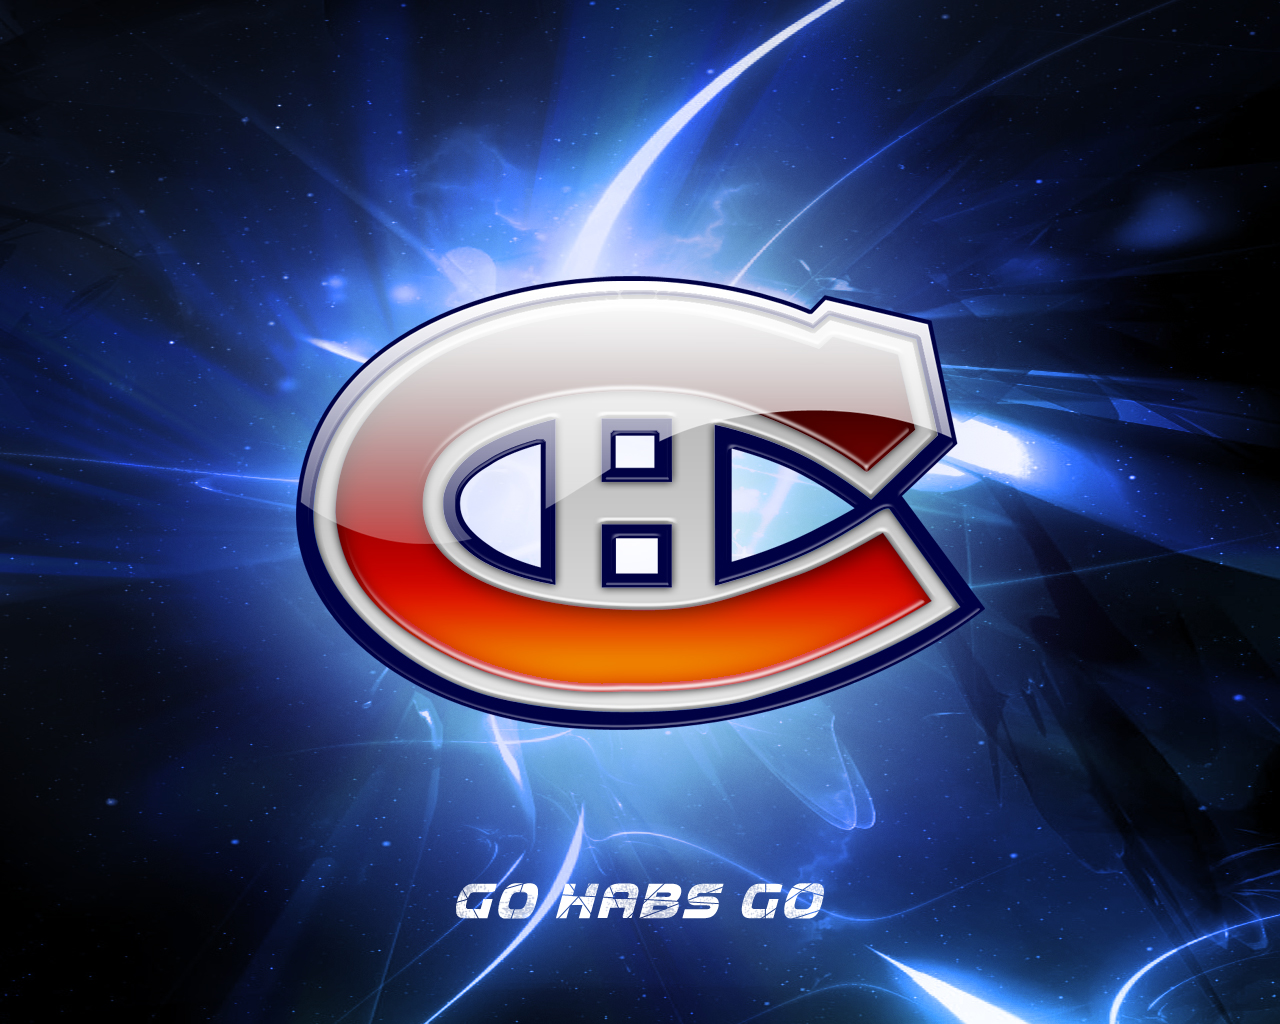 Montreal Canadiens Wallpaper Habs Go Go